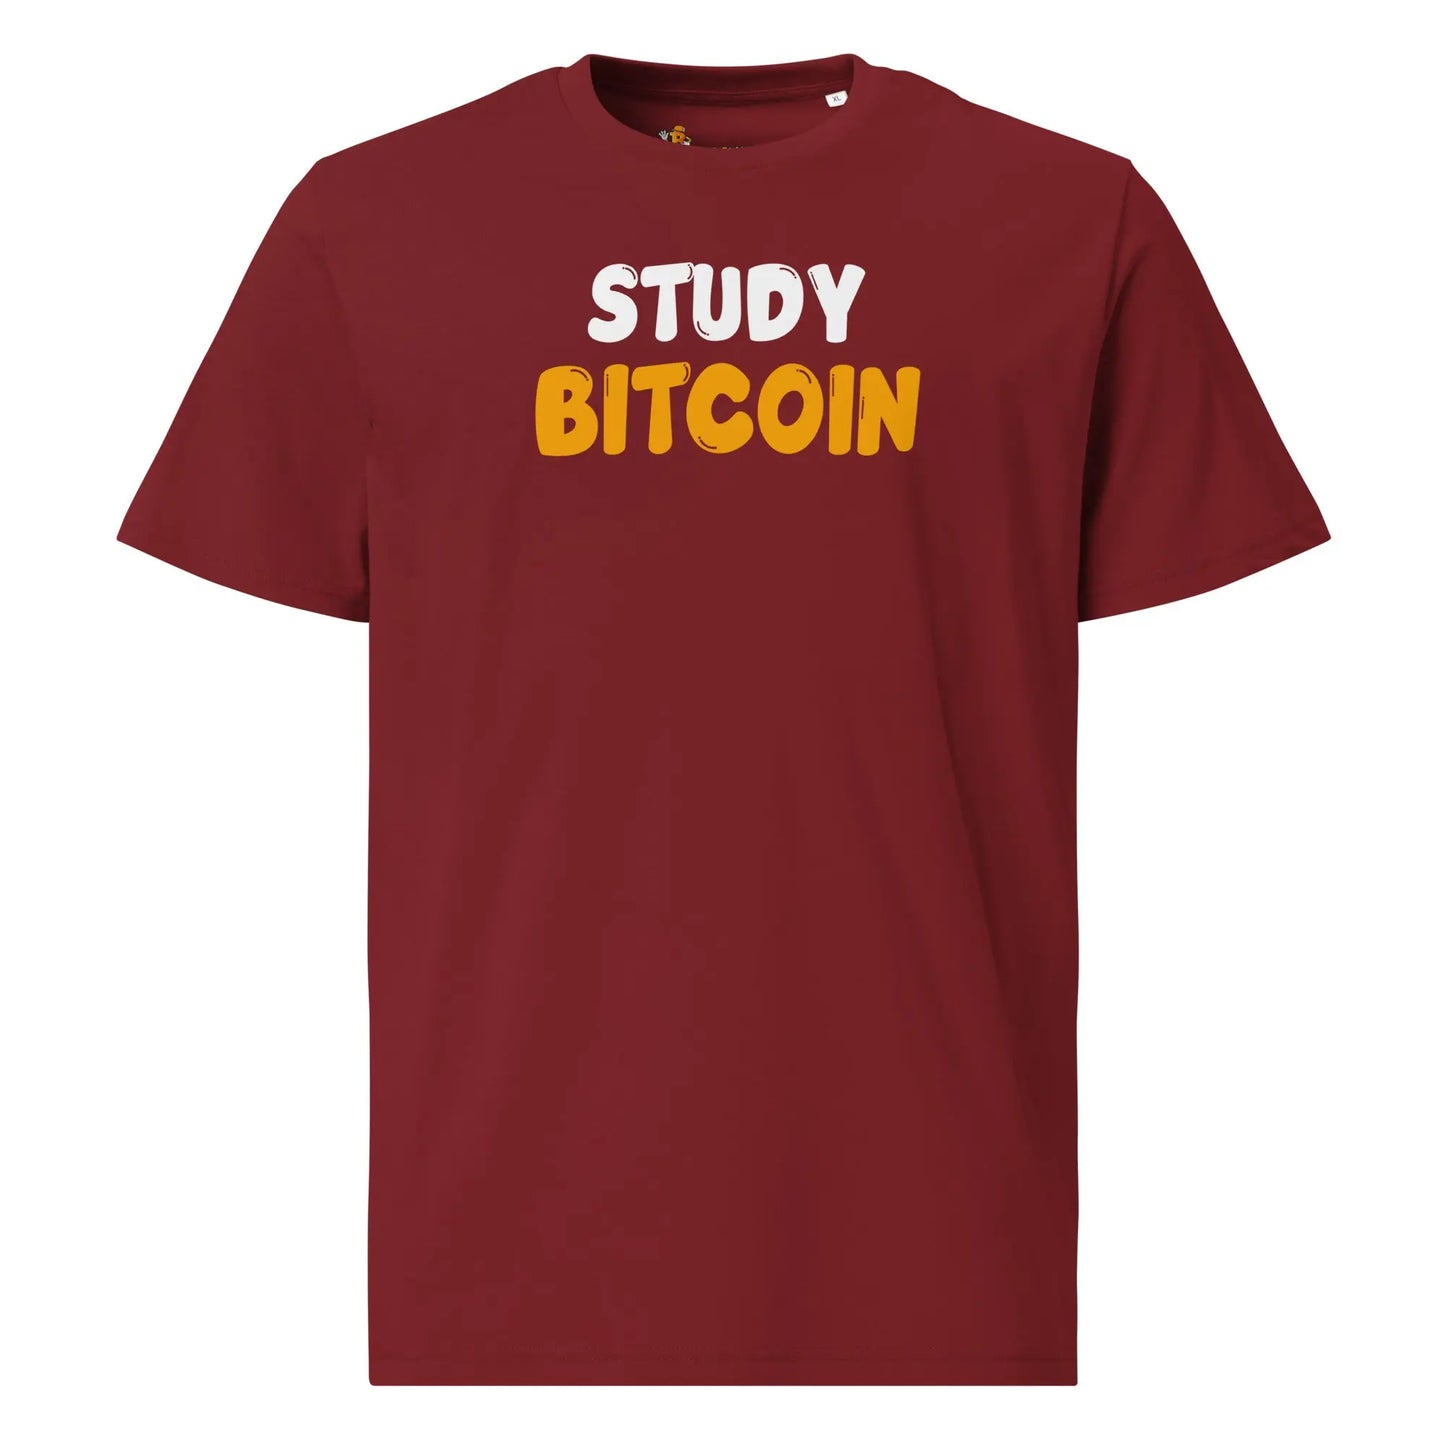 Study Bitcoin - Premium Unisex Organic Cotton Bitcoin T-shirt Burgundy Color